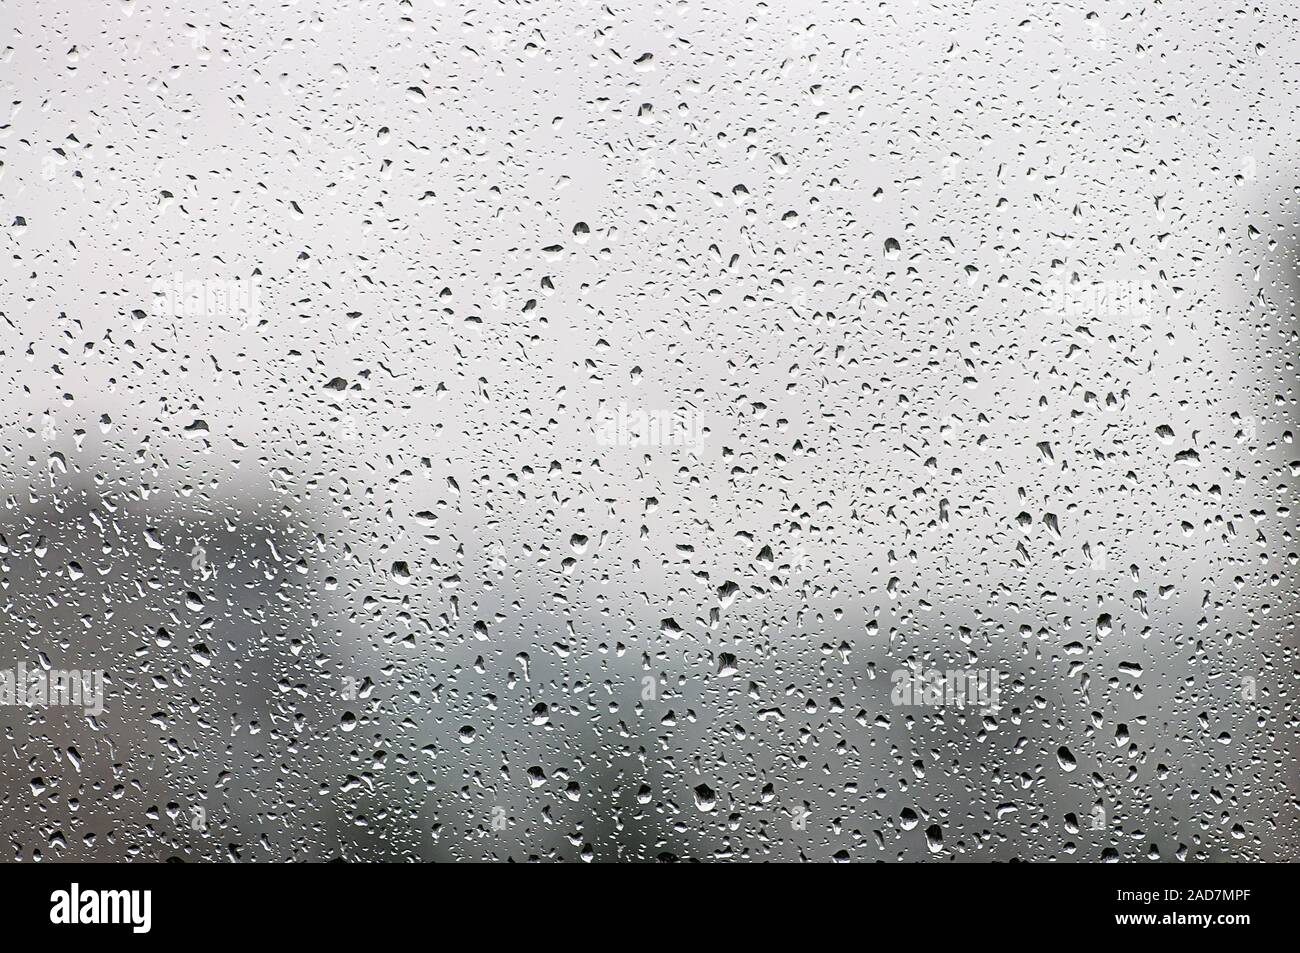 Water drops on window glass Stock Photo